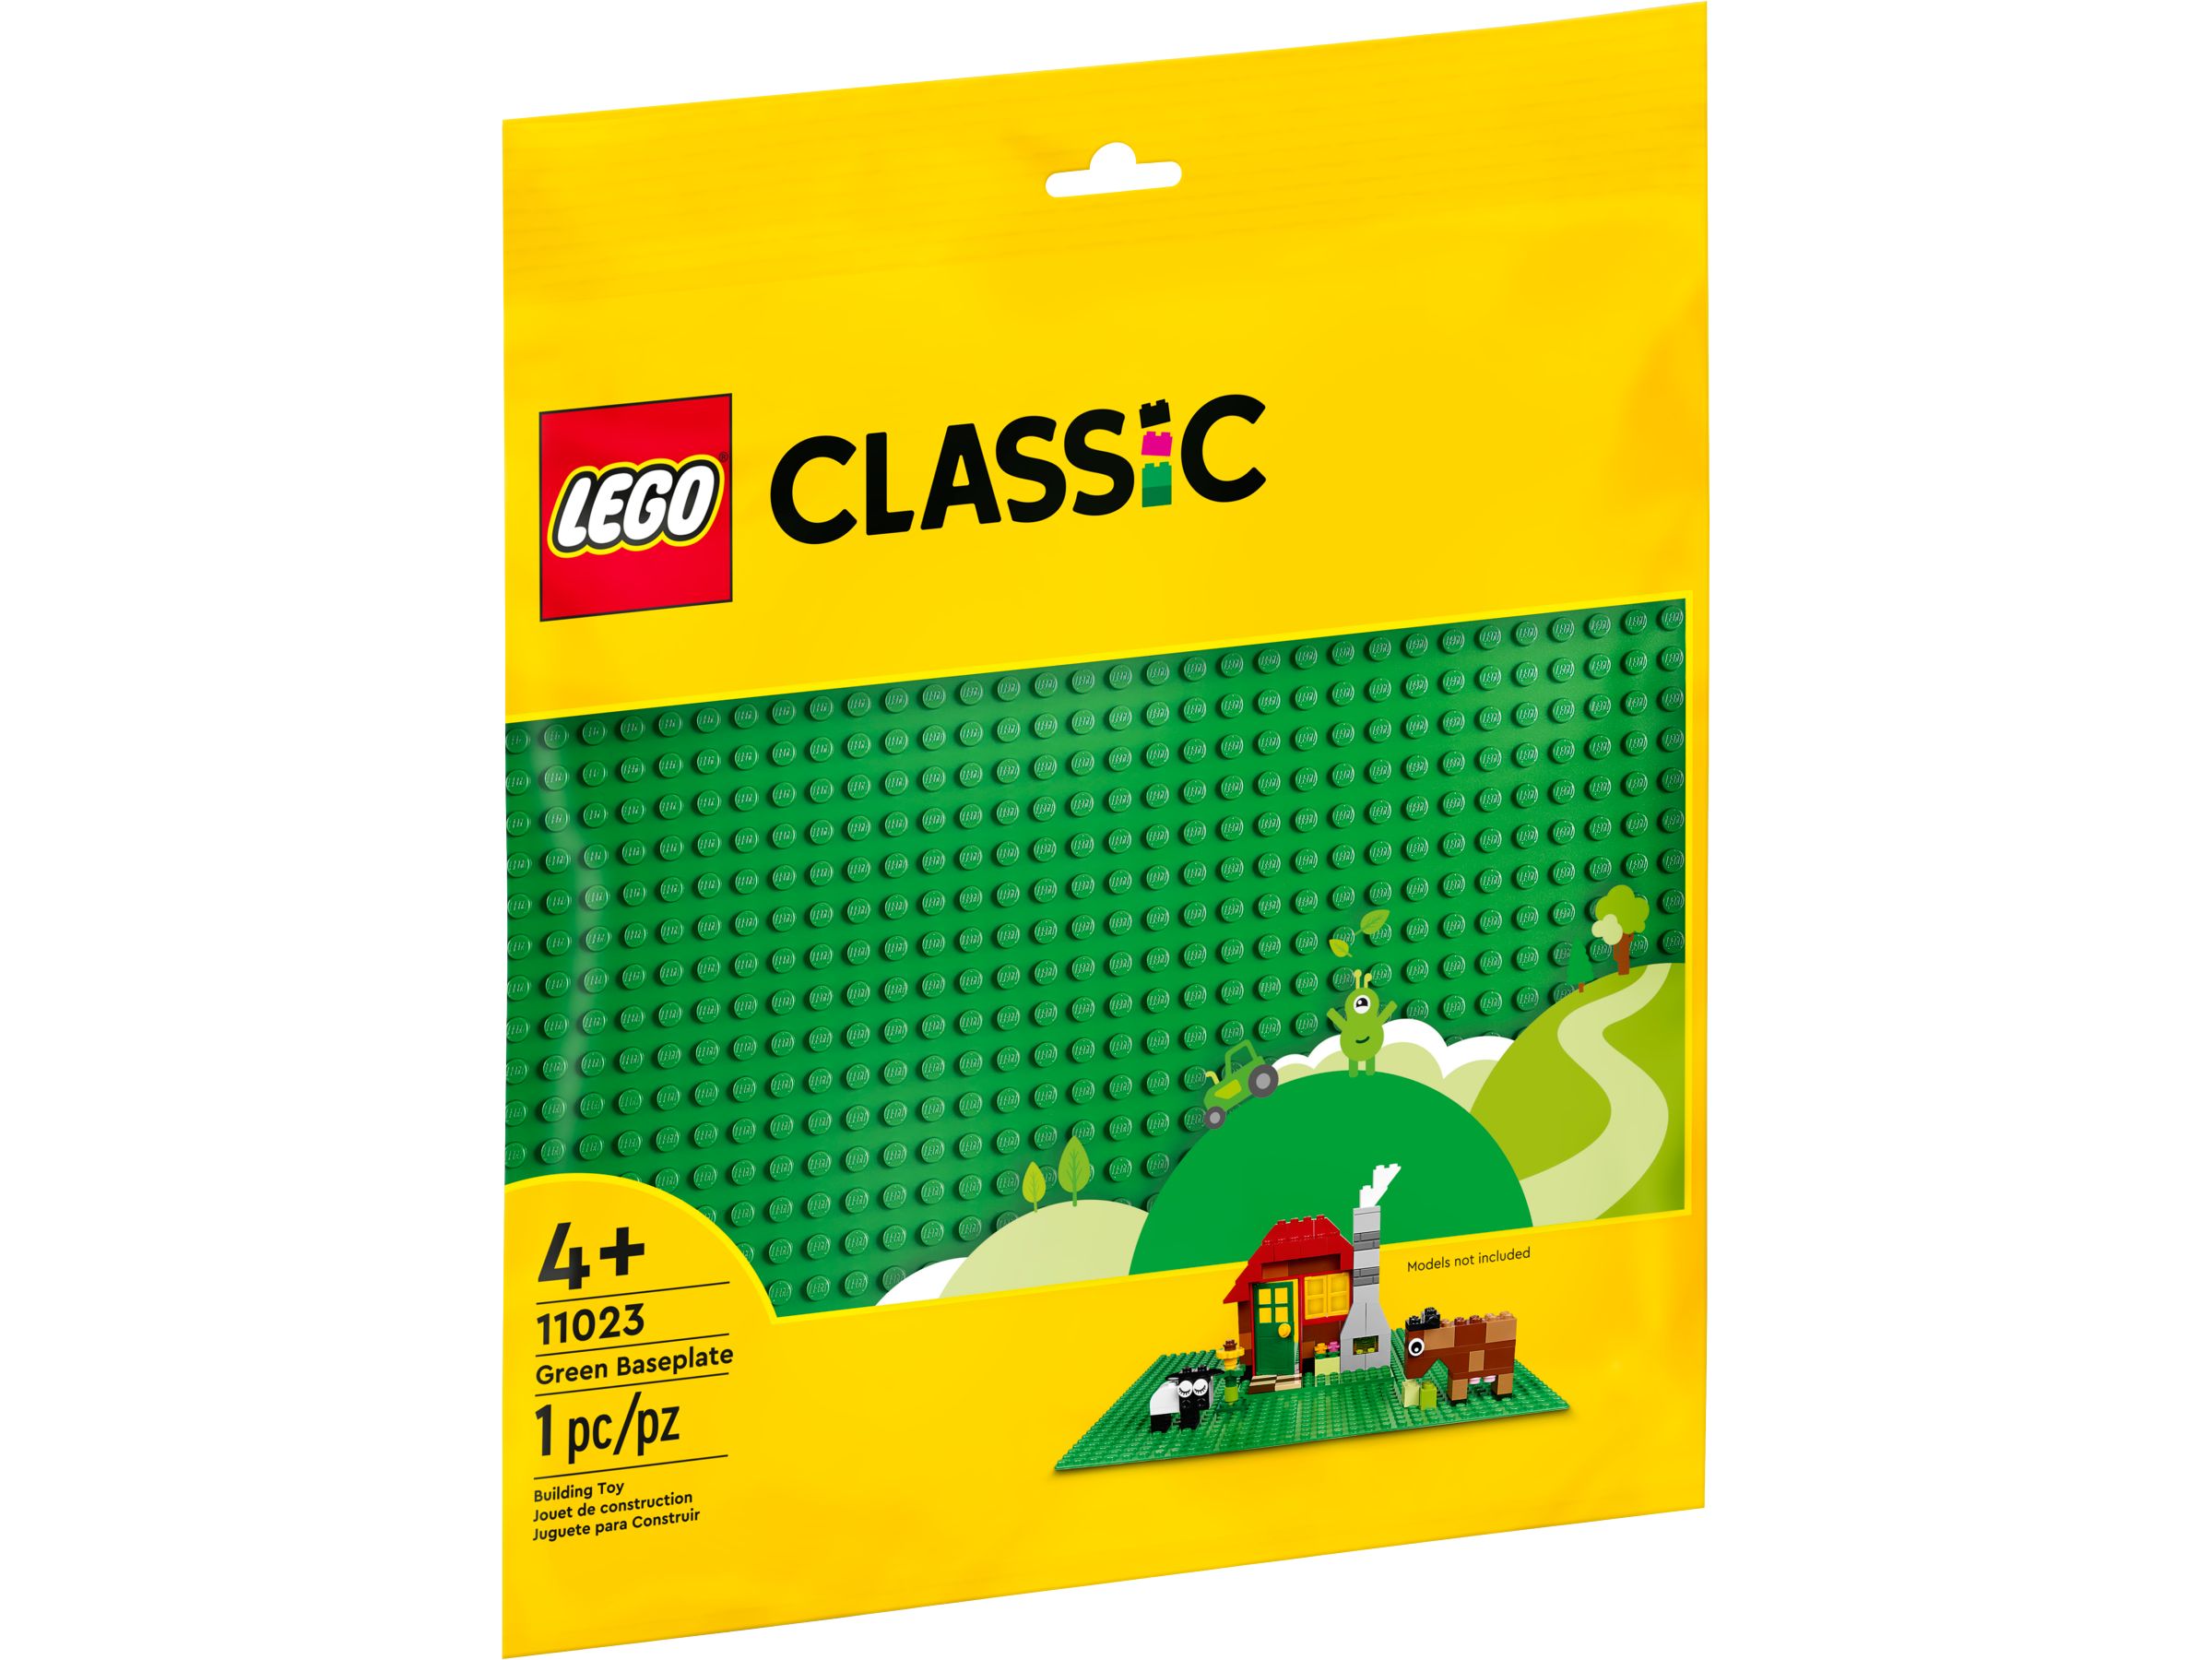 LEGO Classic 11023 Grüne Bauplatte LEGO_11023_alt1.jpg